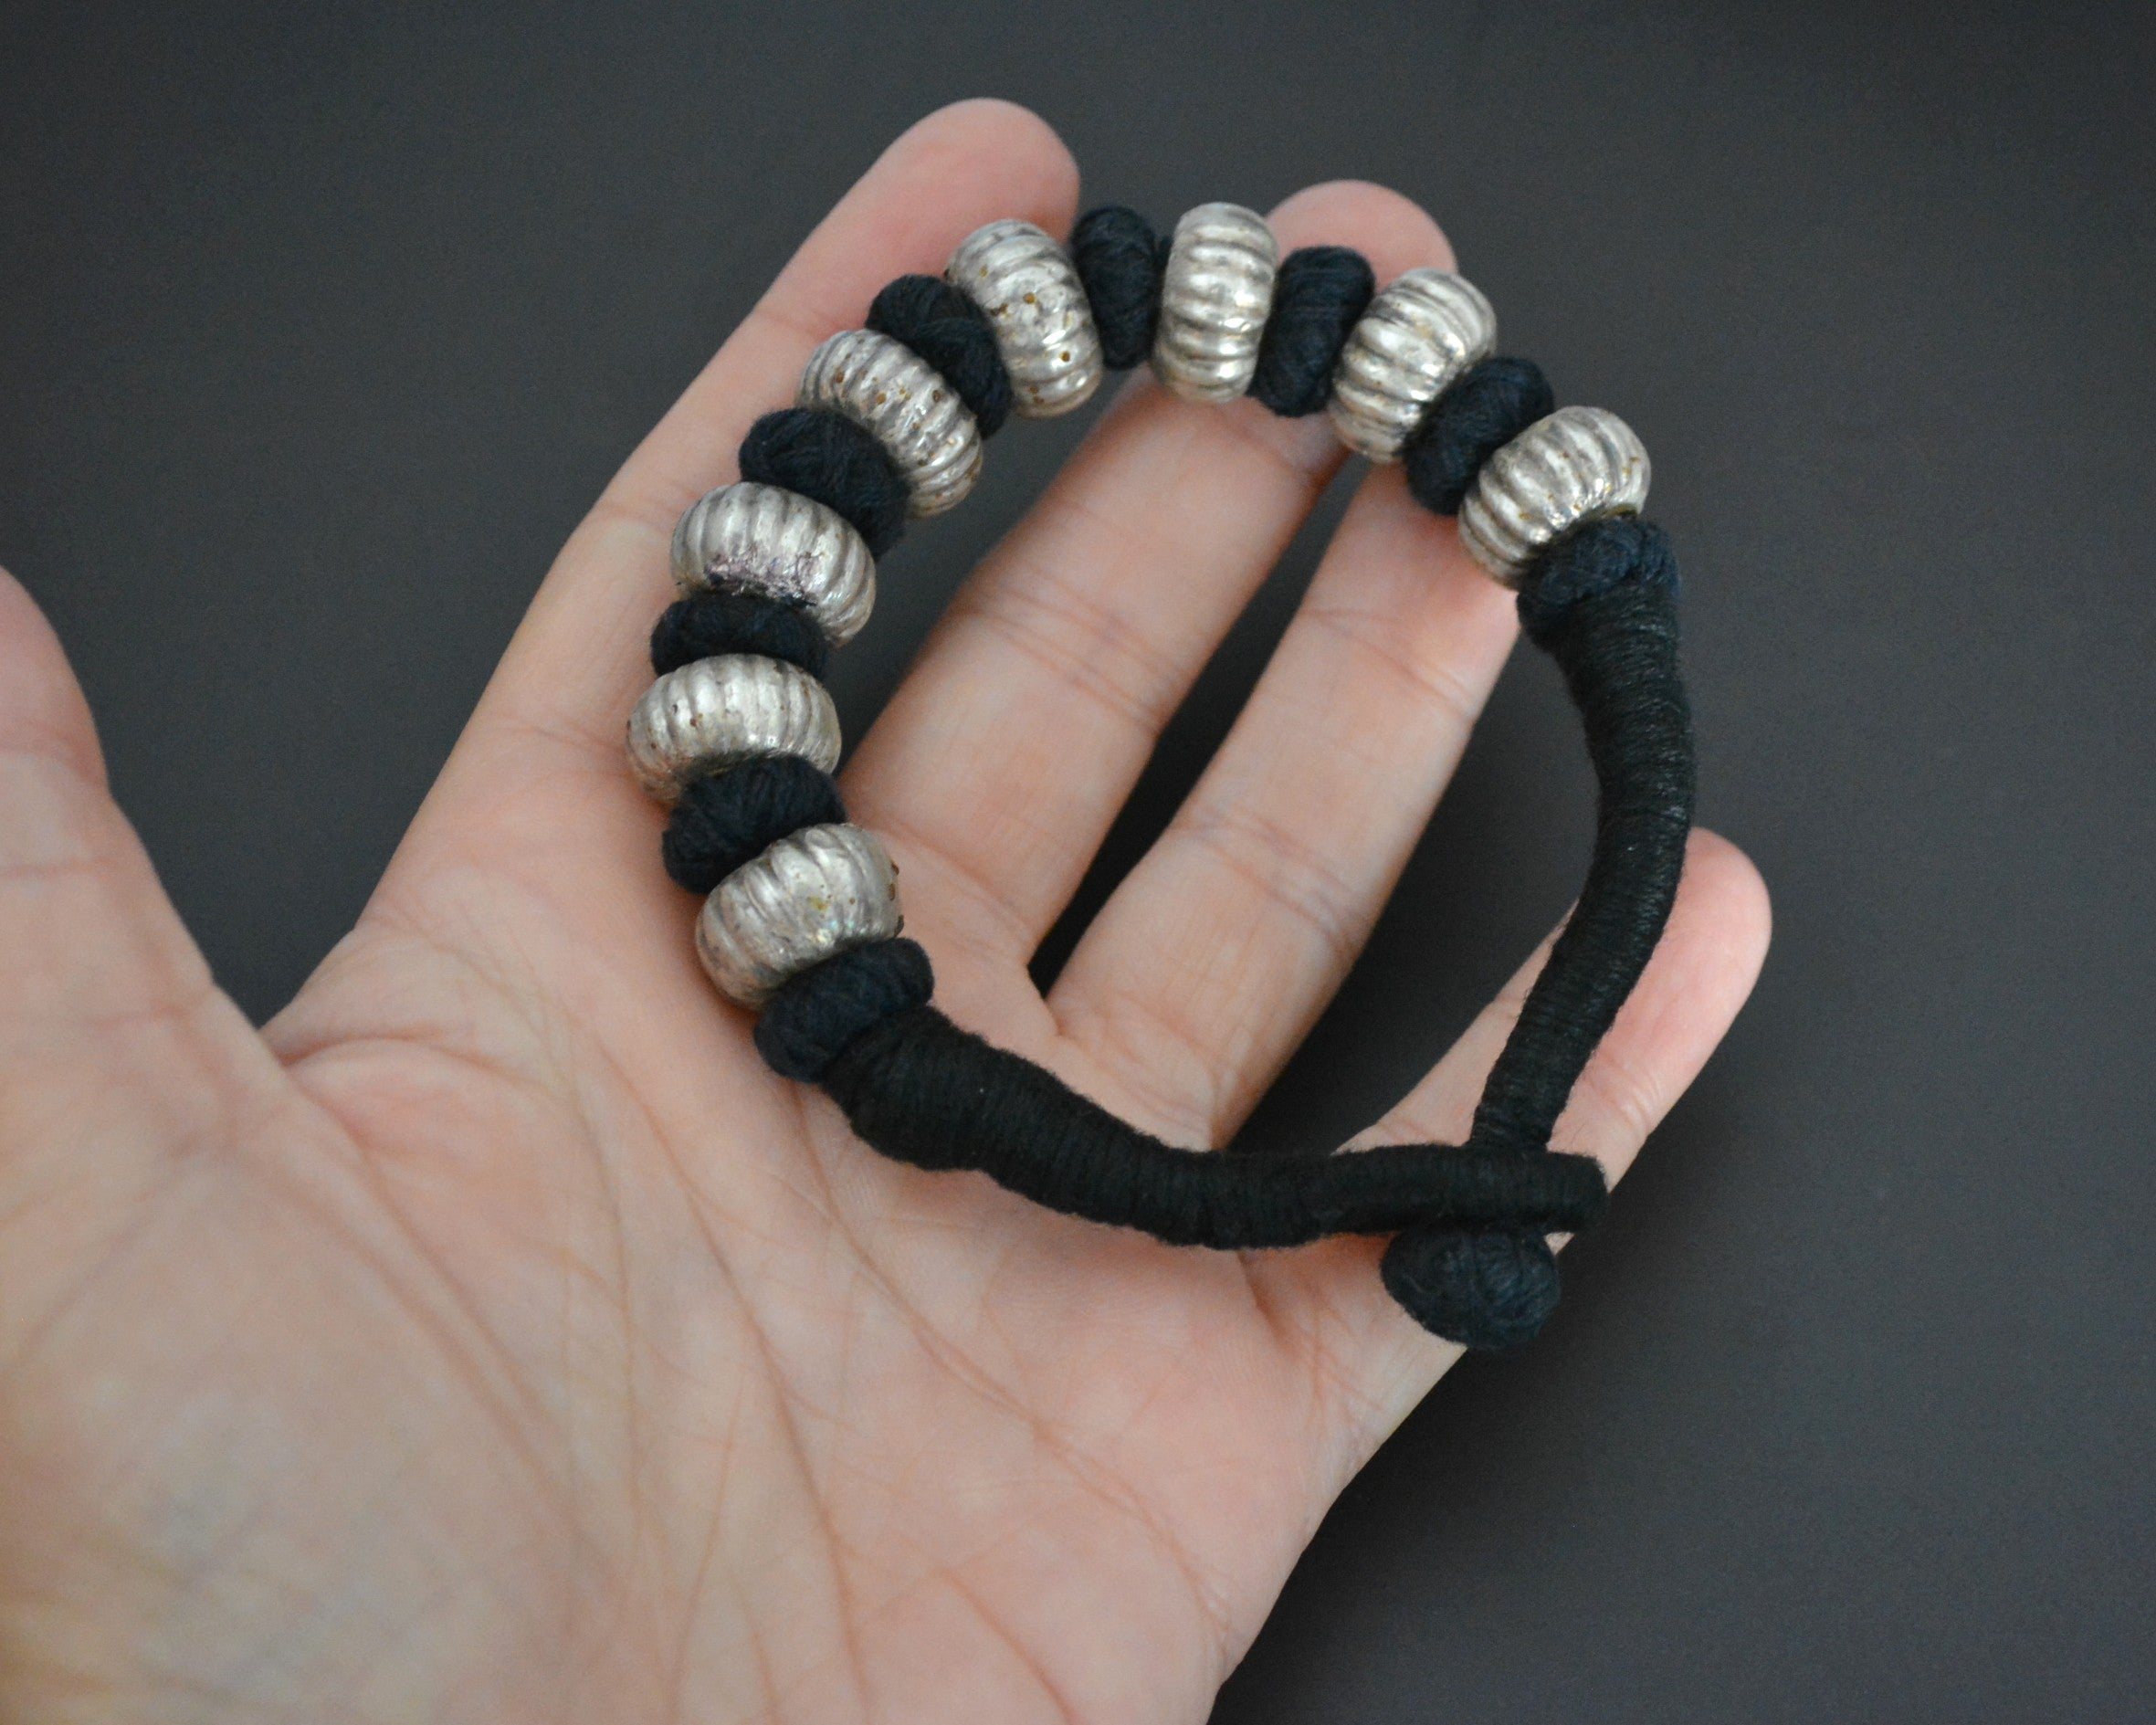 Rajasthani Silver Wax Beads Cotton Bracelet - Black - MEDIUM